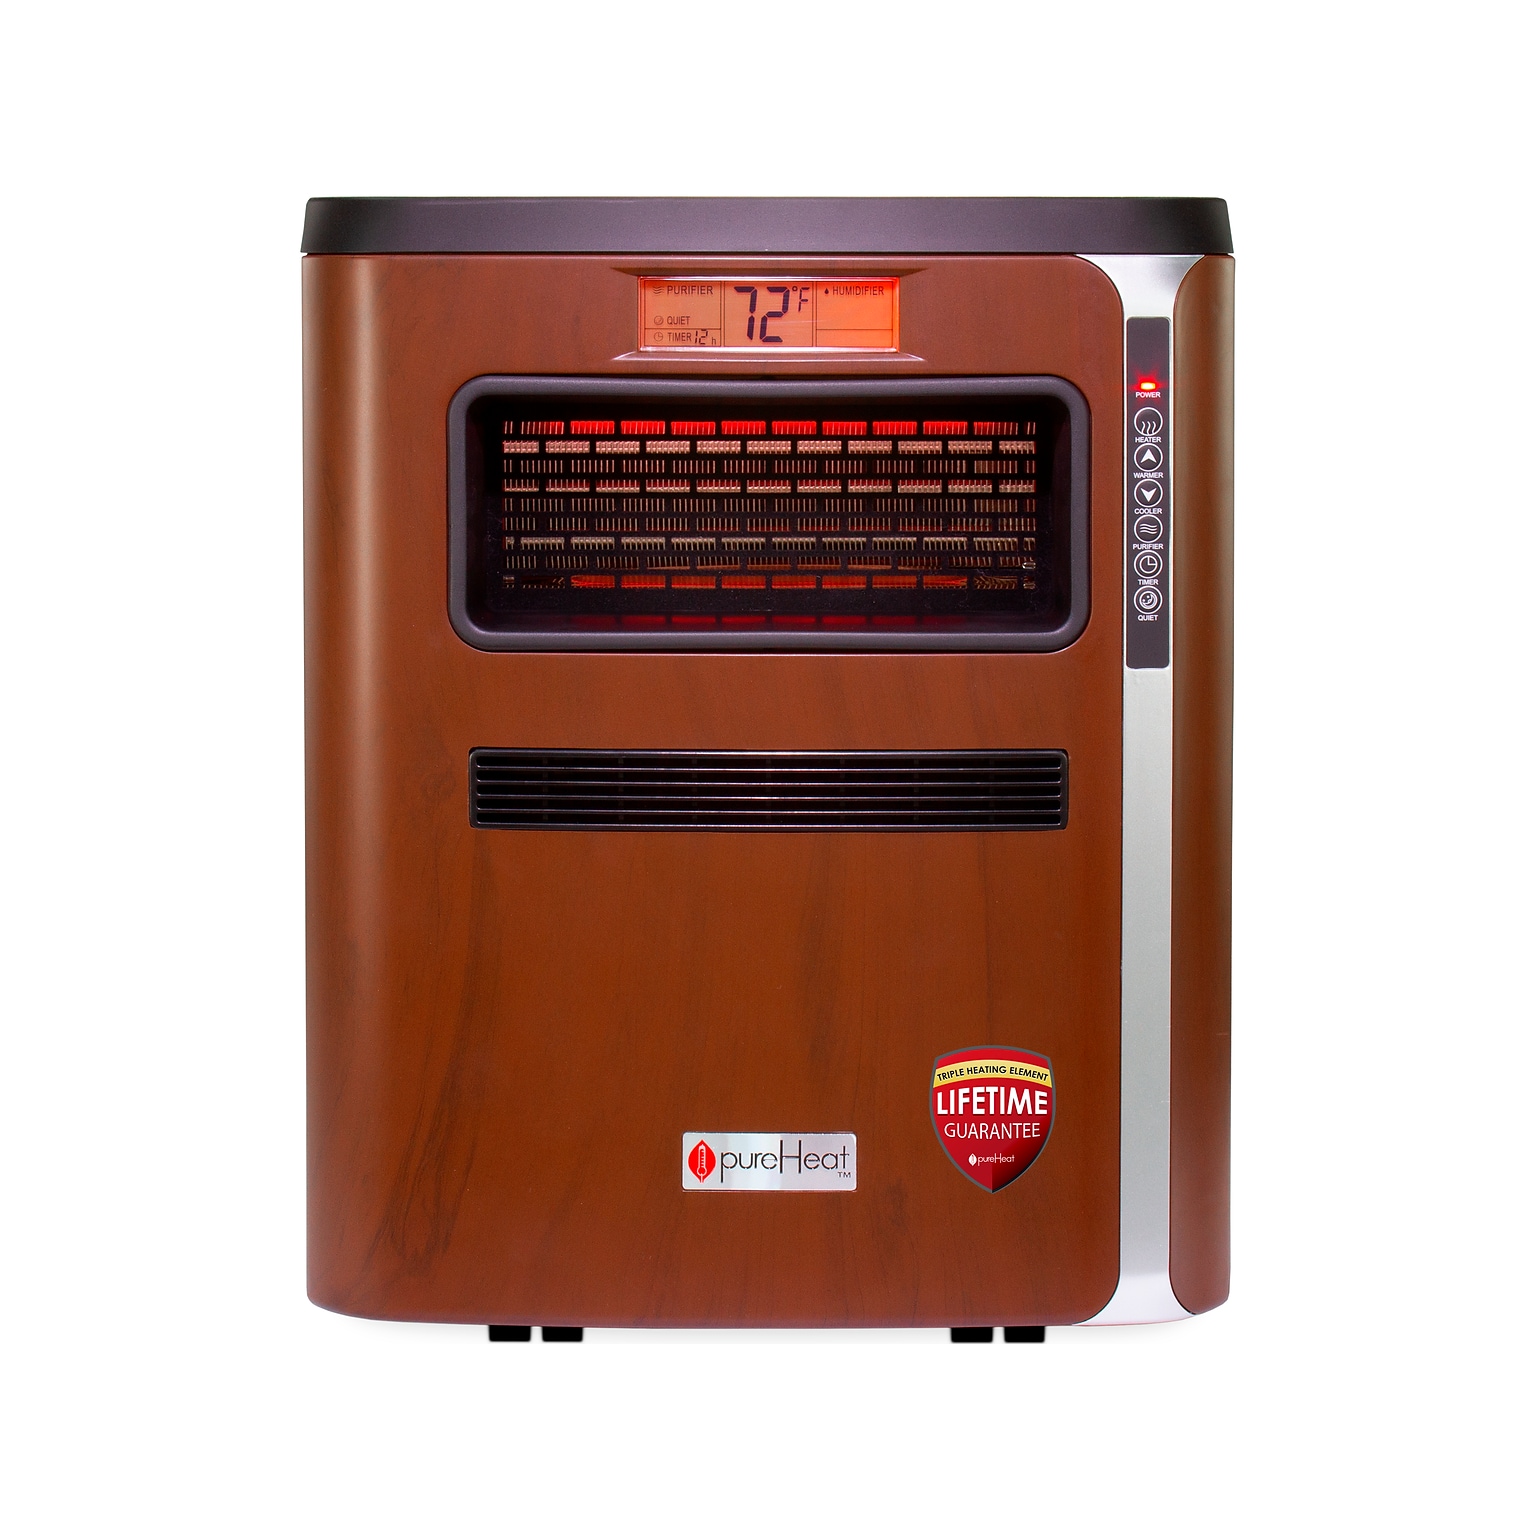 GreenTech Environmental pureHeat 3-in-1 1500-Watt 5200 BTU Infrared Electric Heater, Brown (PH3IN1V01US)